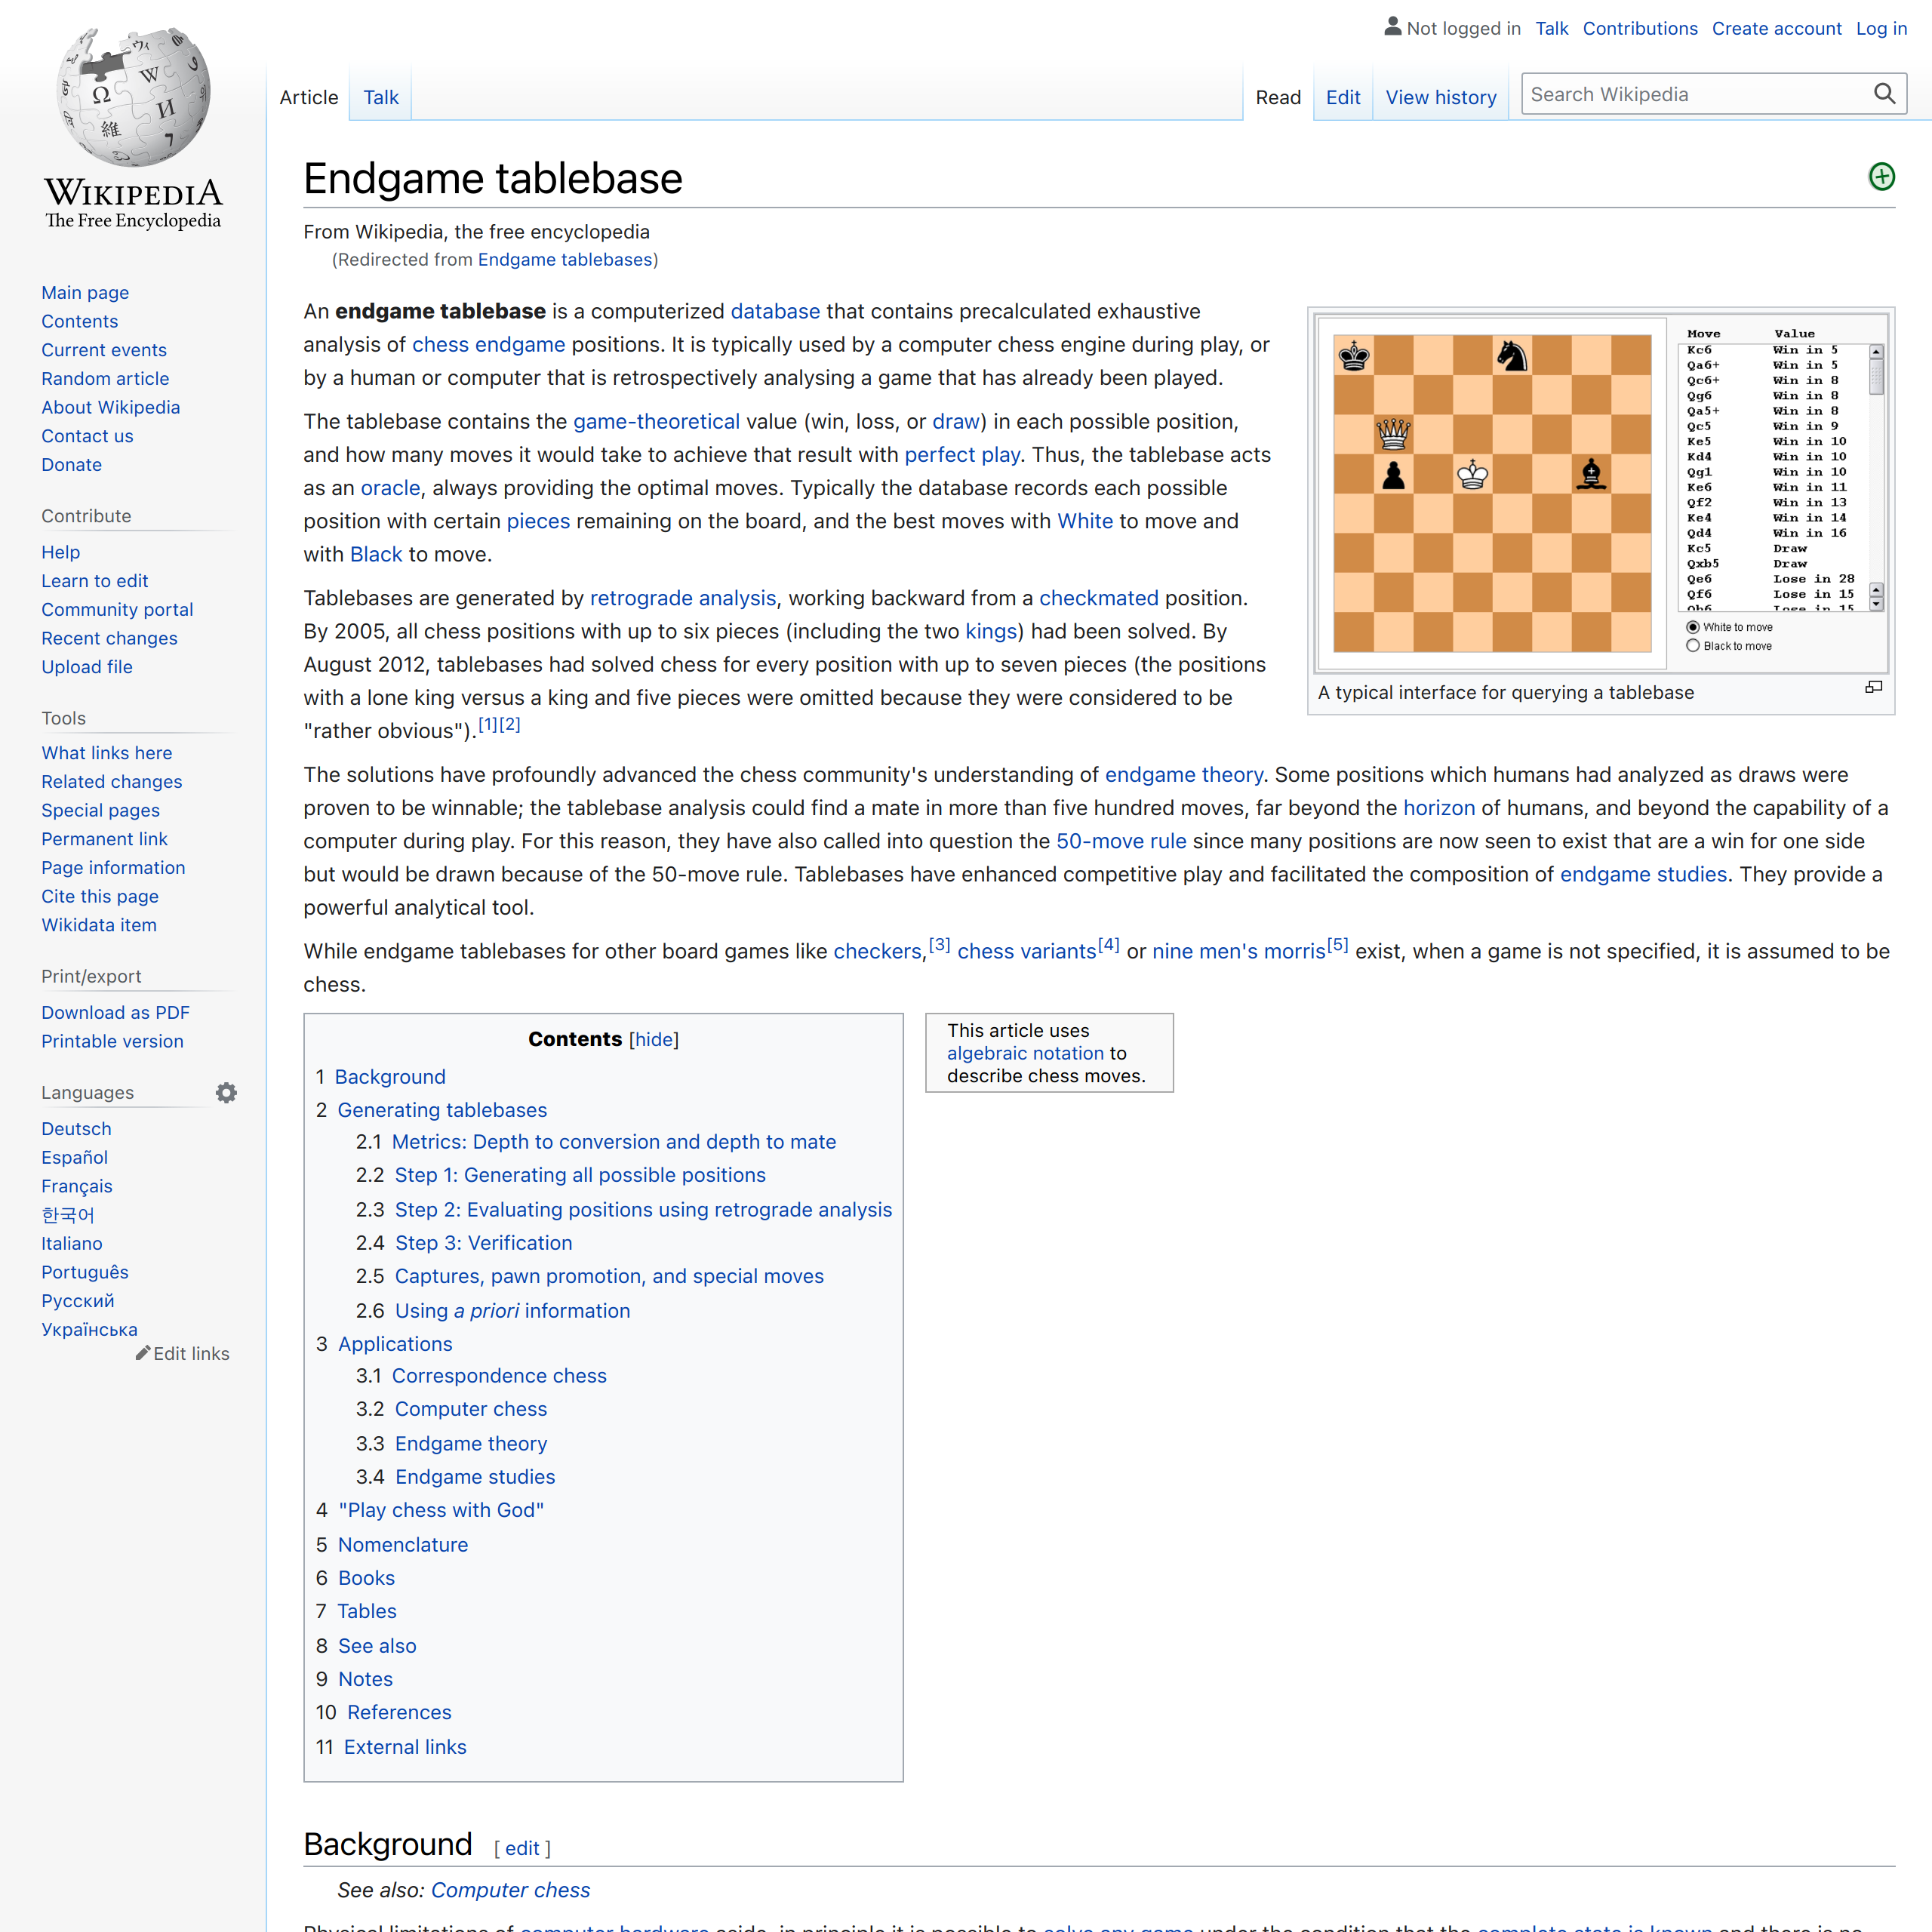 Endgame tablebase - Wikipedia